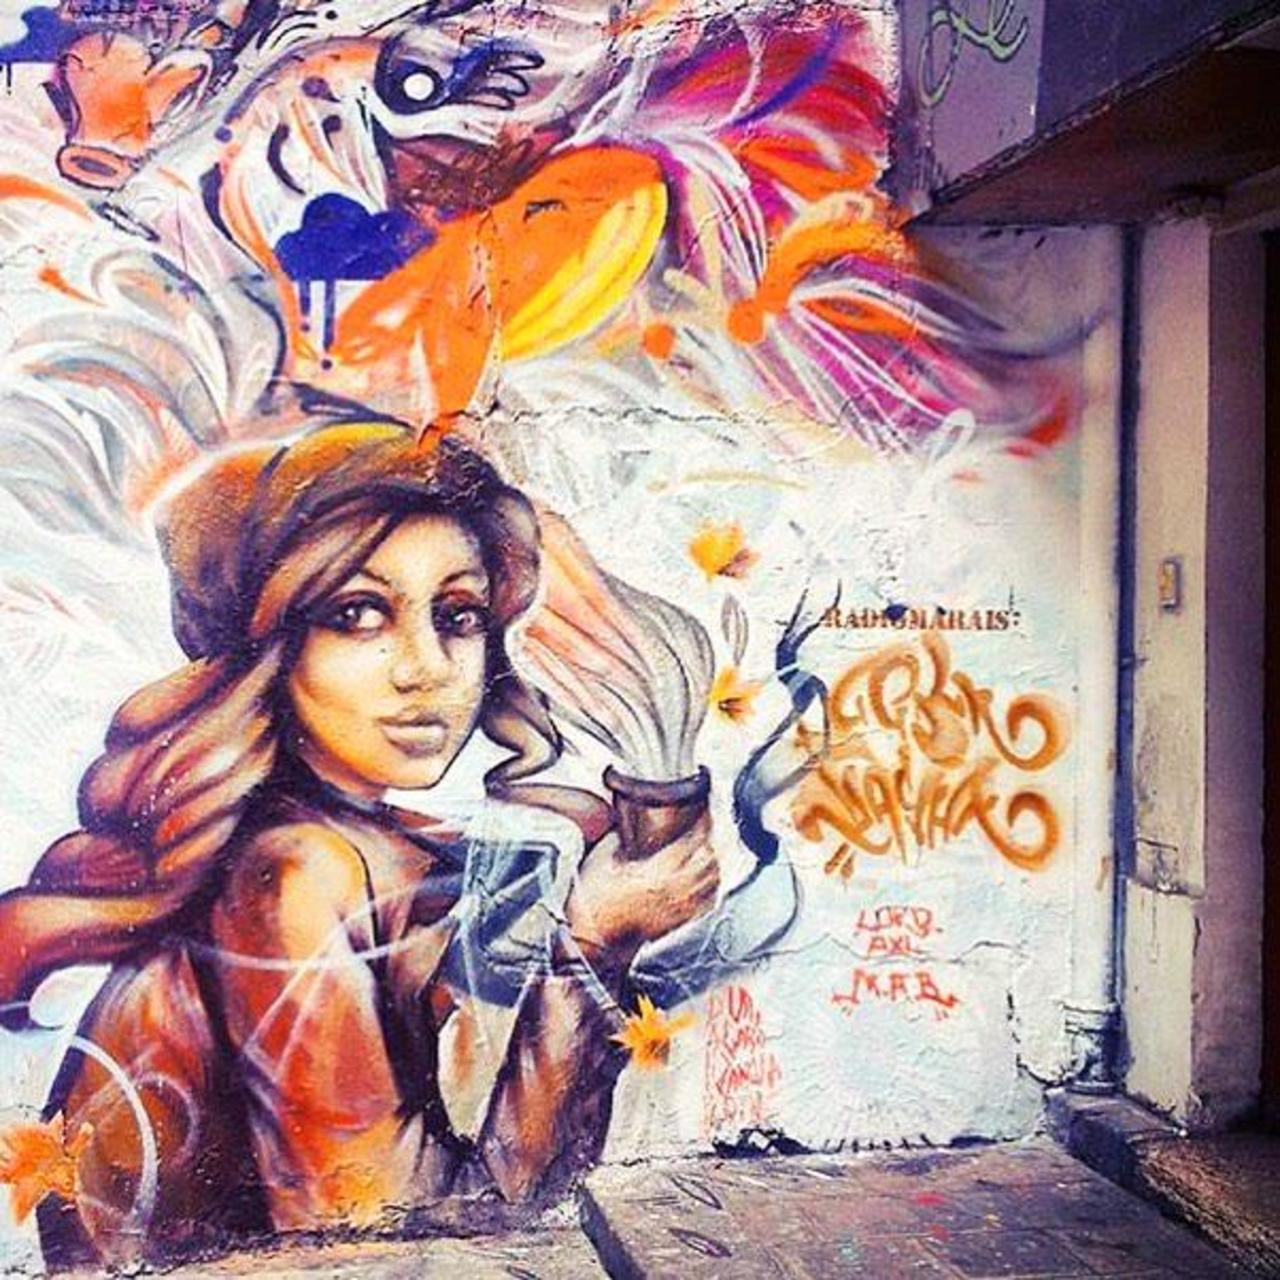 #Paris #graffiti photo by @jeanlucr http://ift.tt/1K6fC8x #StreetArt http://t.co/ZTbaUyGeaj